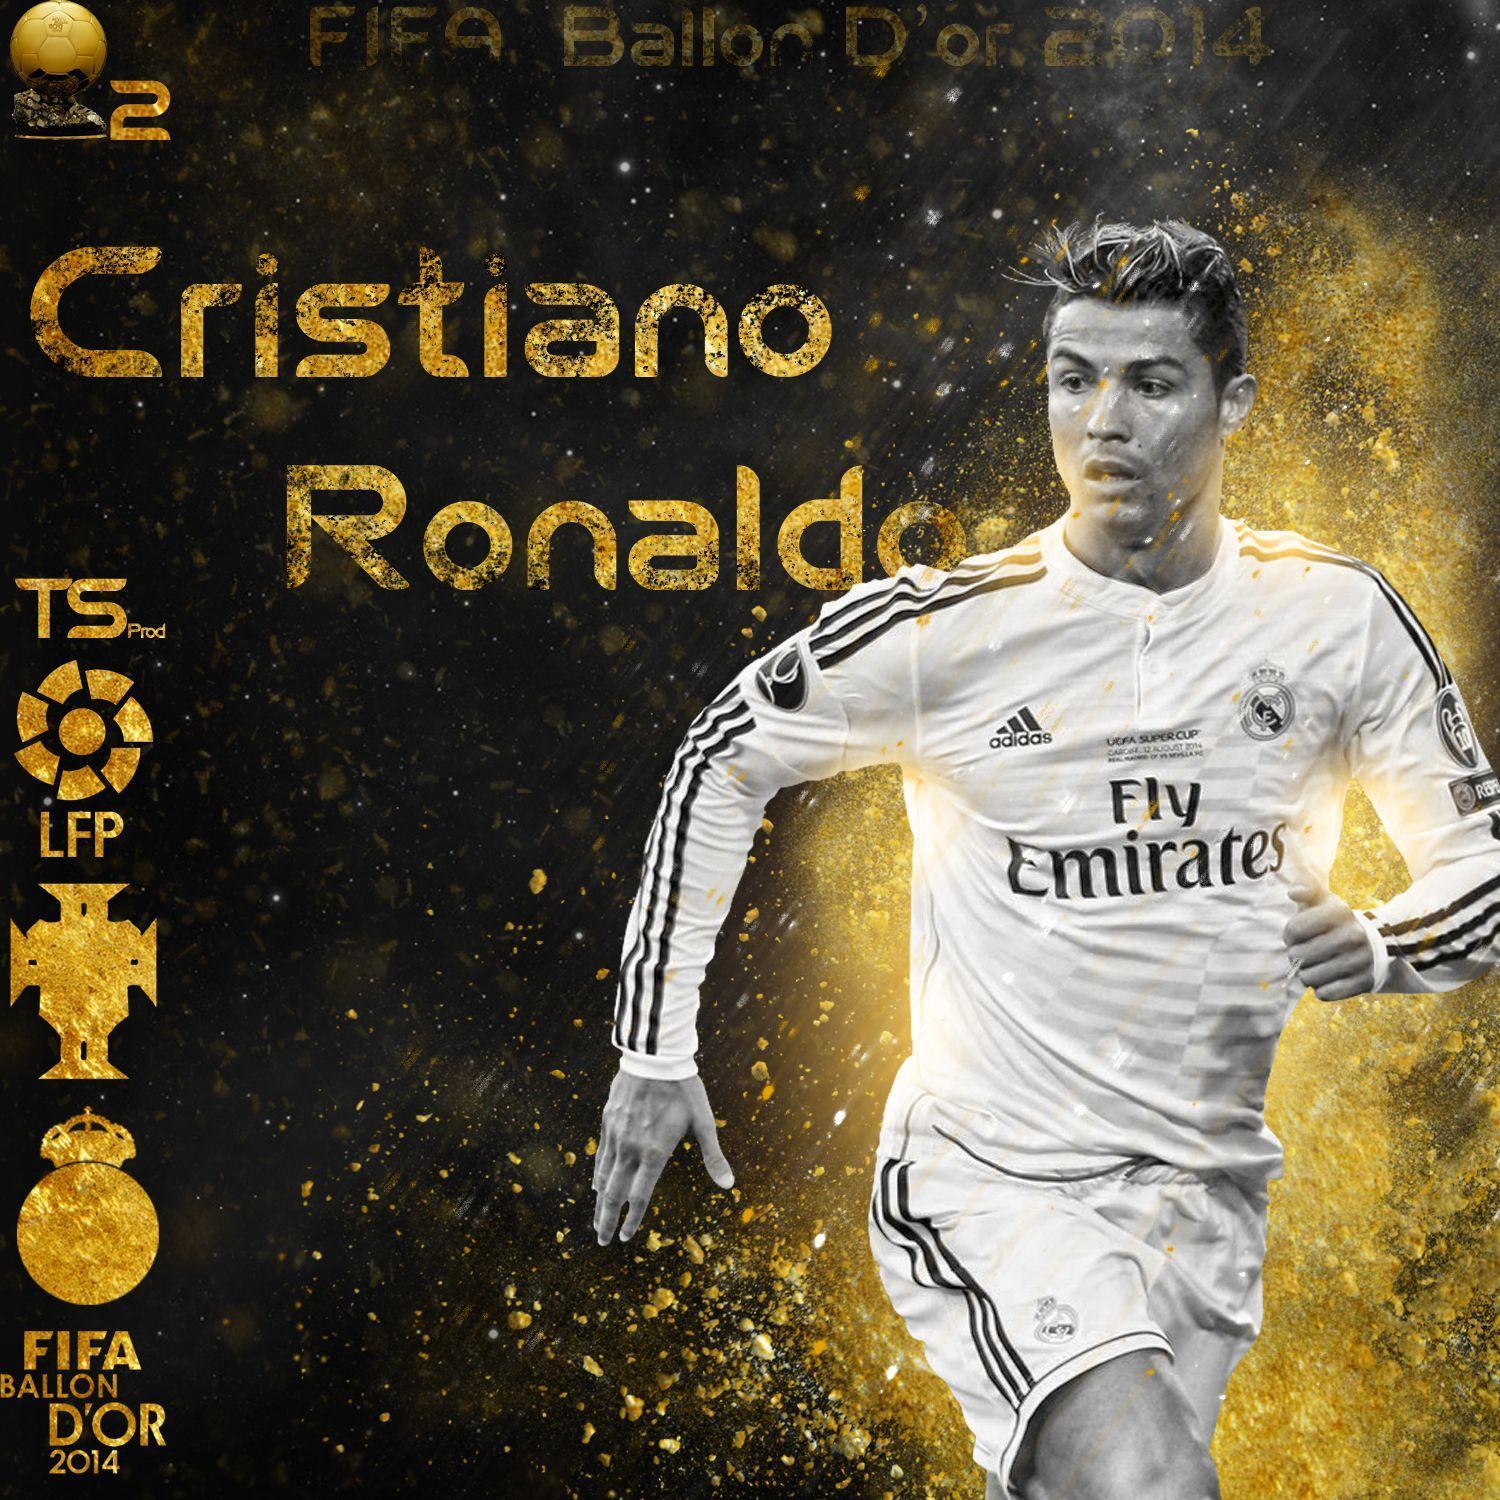 FIFA Ballon D'or 2014 Cristiano Ronaldo By TS Production